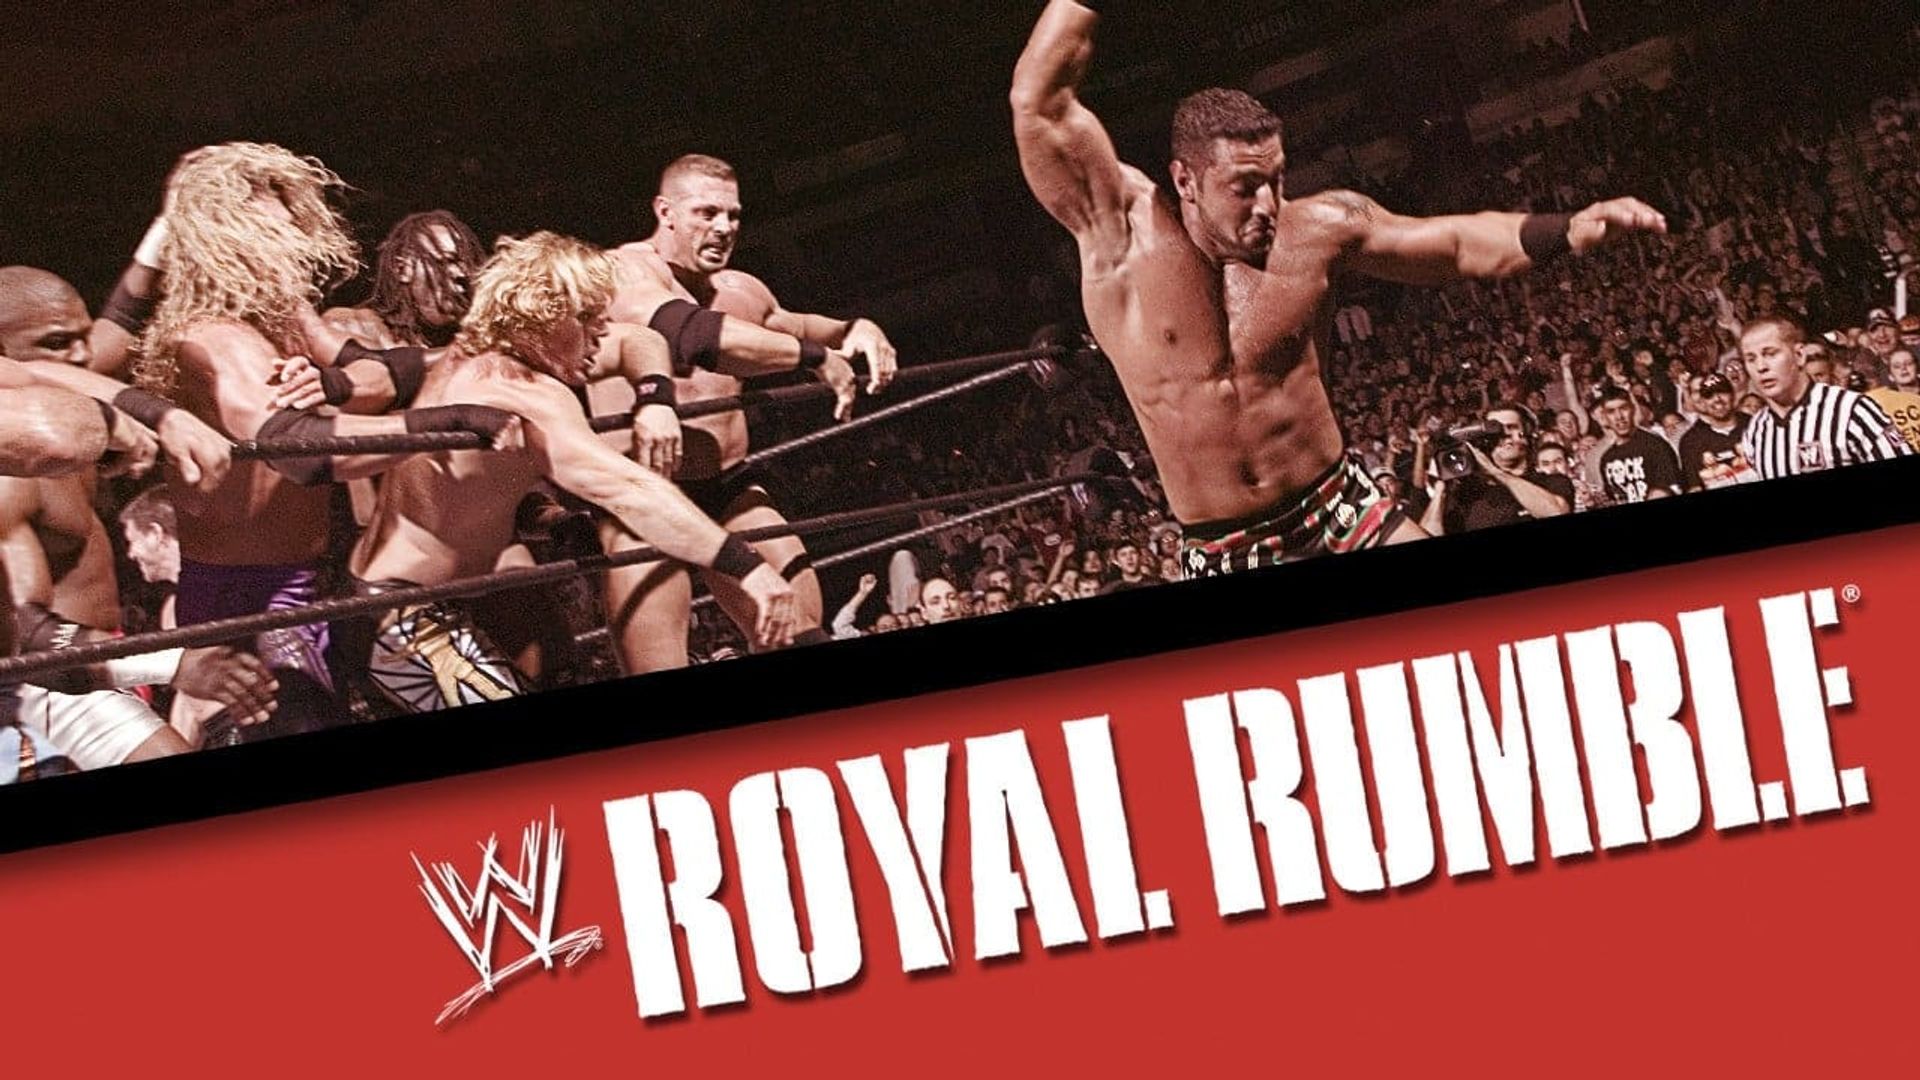 WWE Royal Rumble background